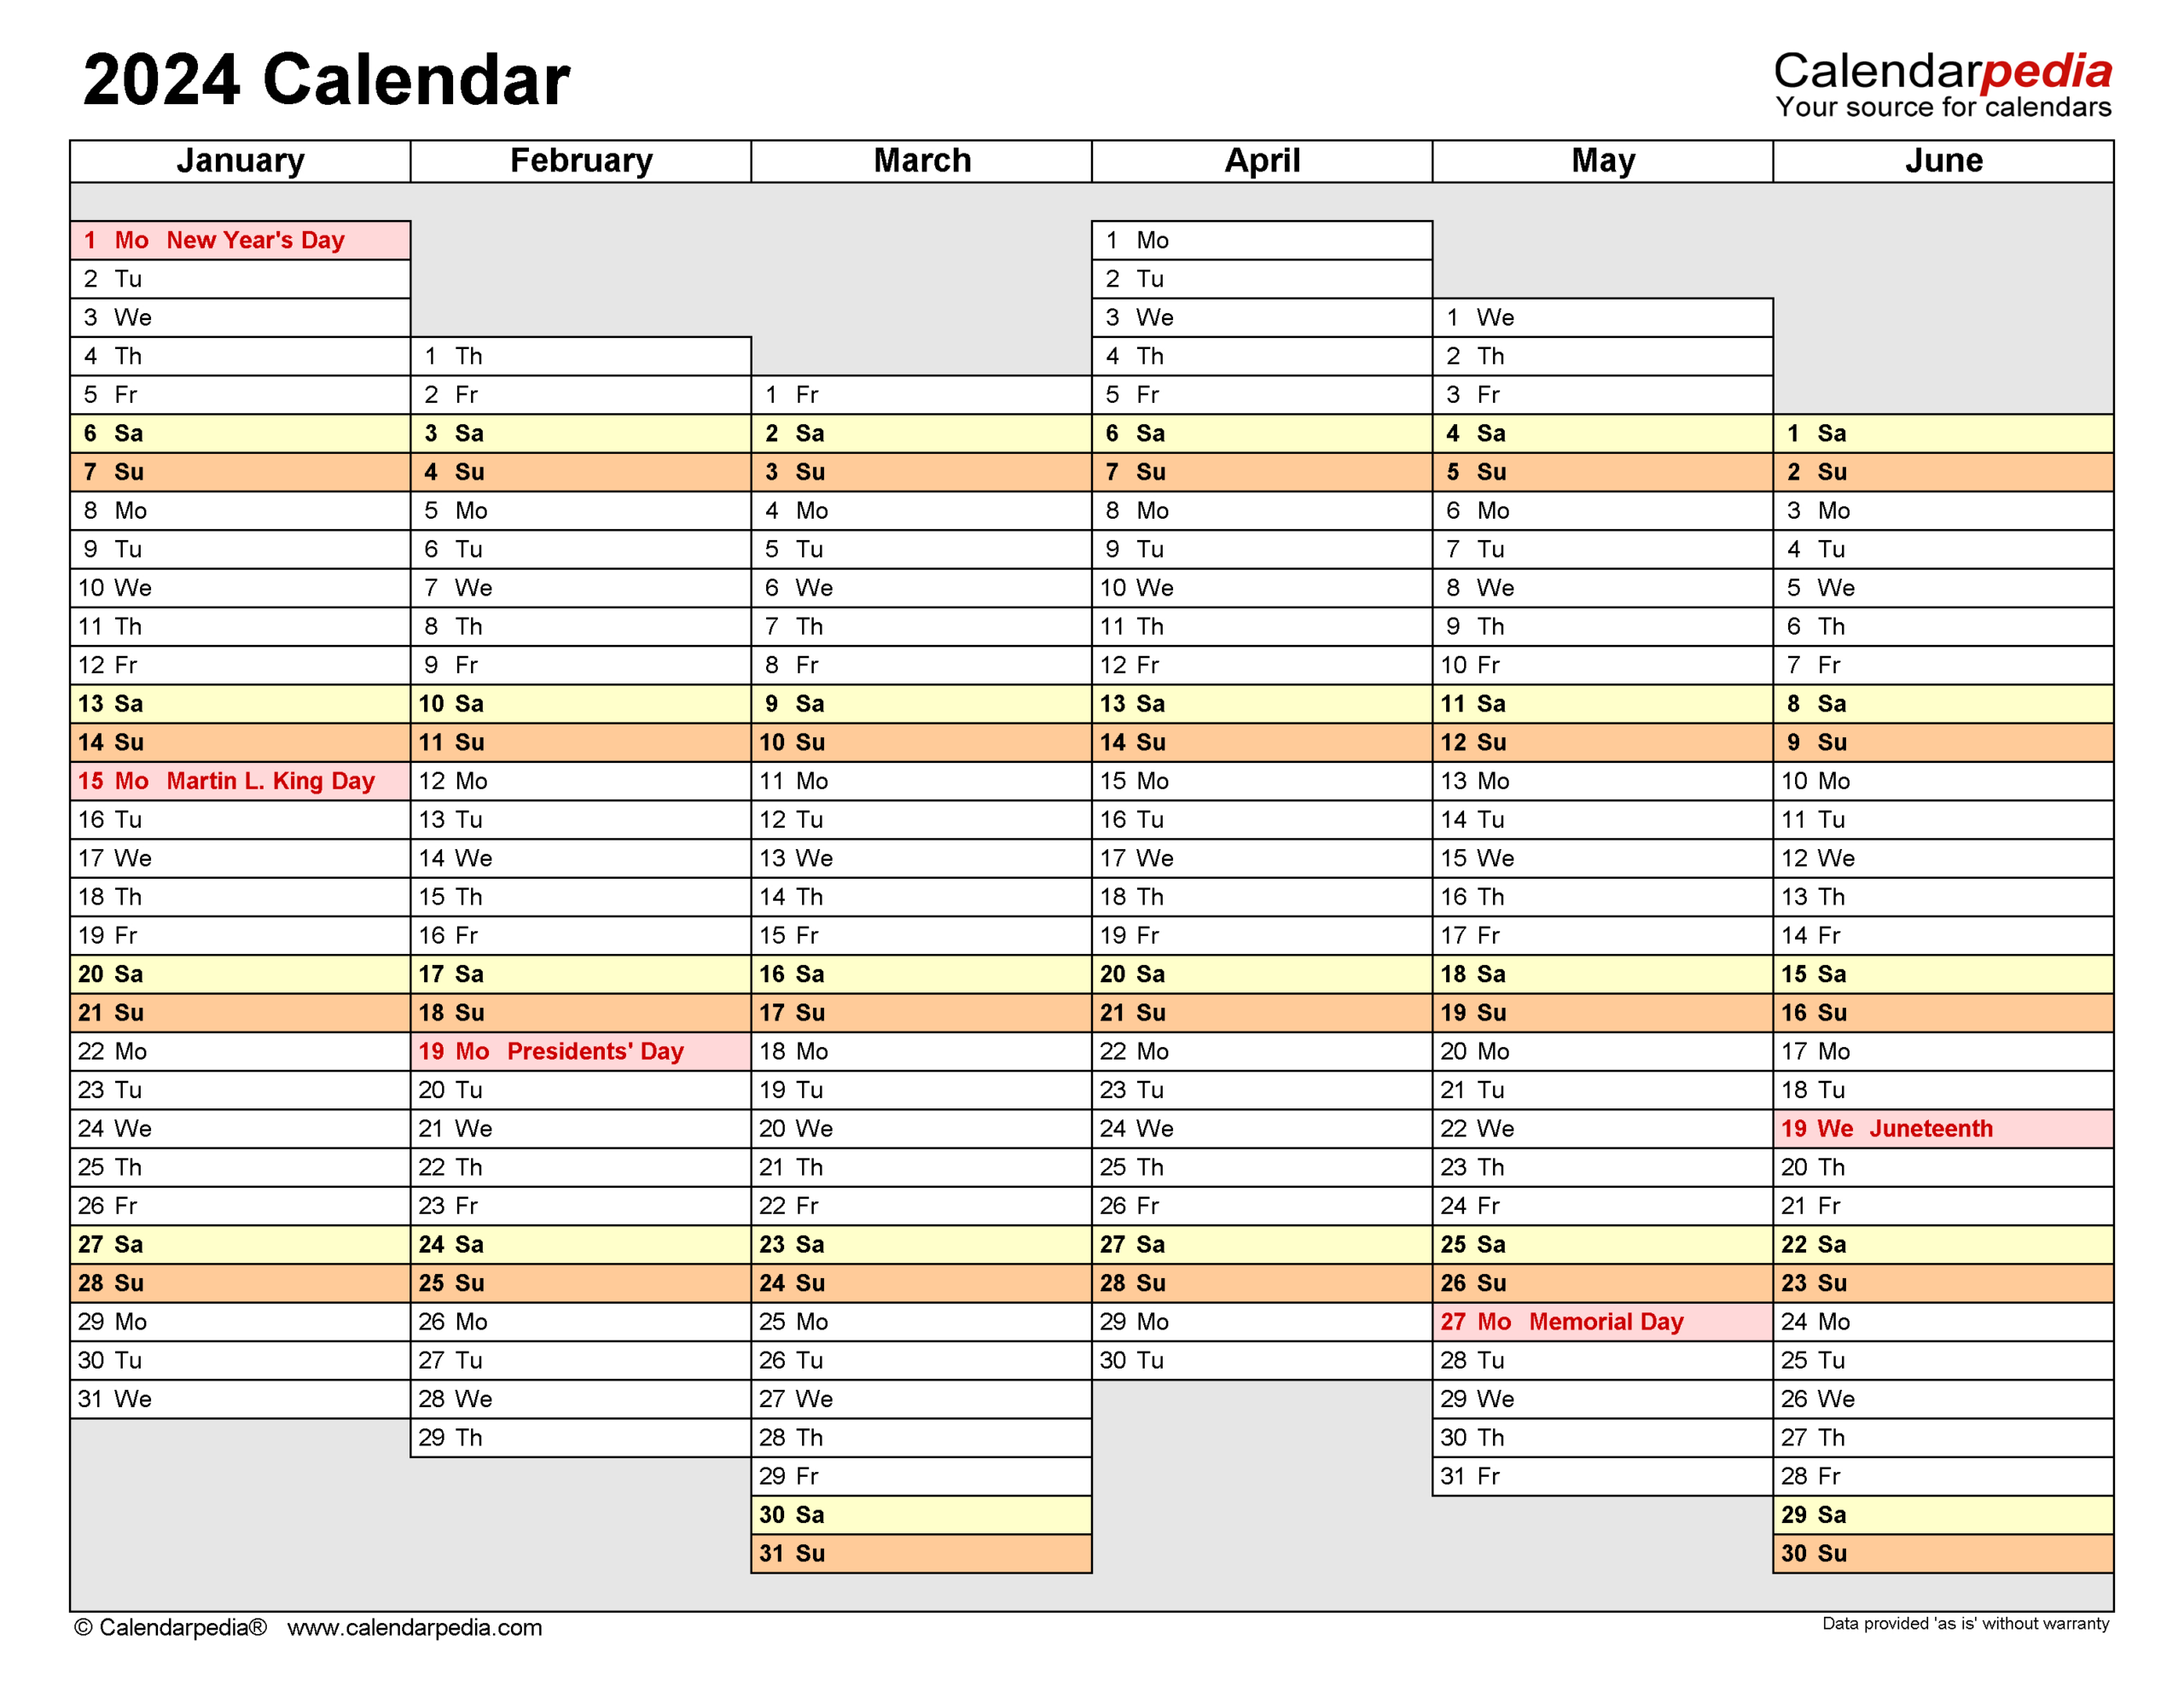 2024 Calendar - Free Printable Excel Templates - Calendarpedia | 2024 Year Calendar In Excel